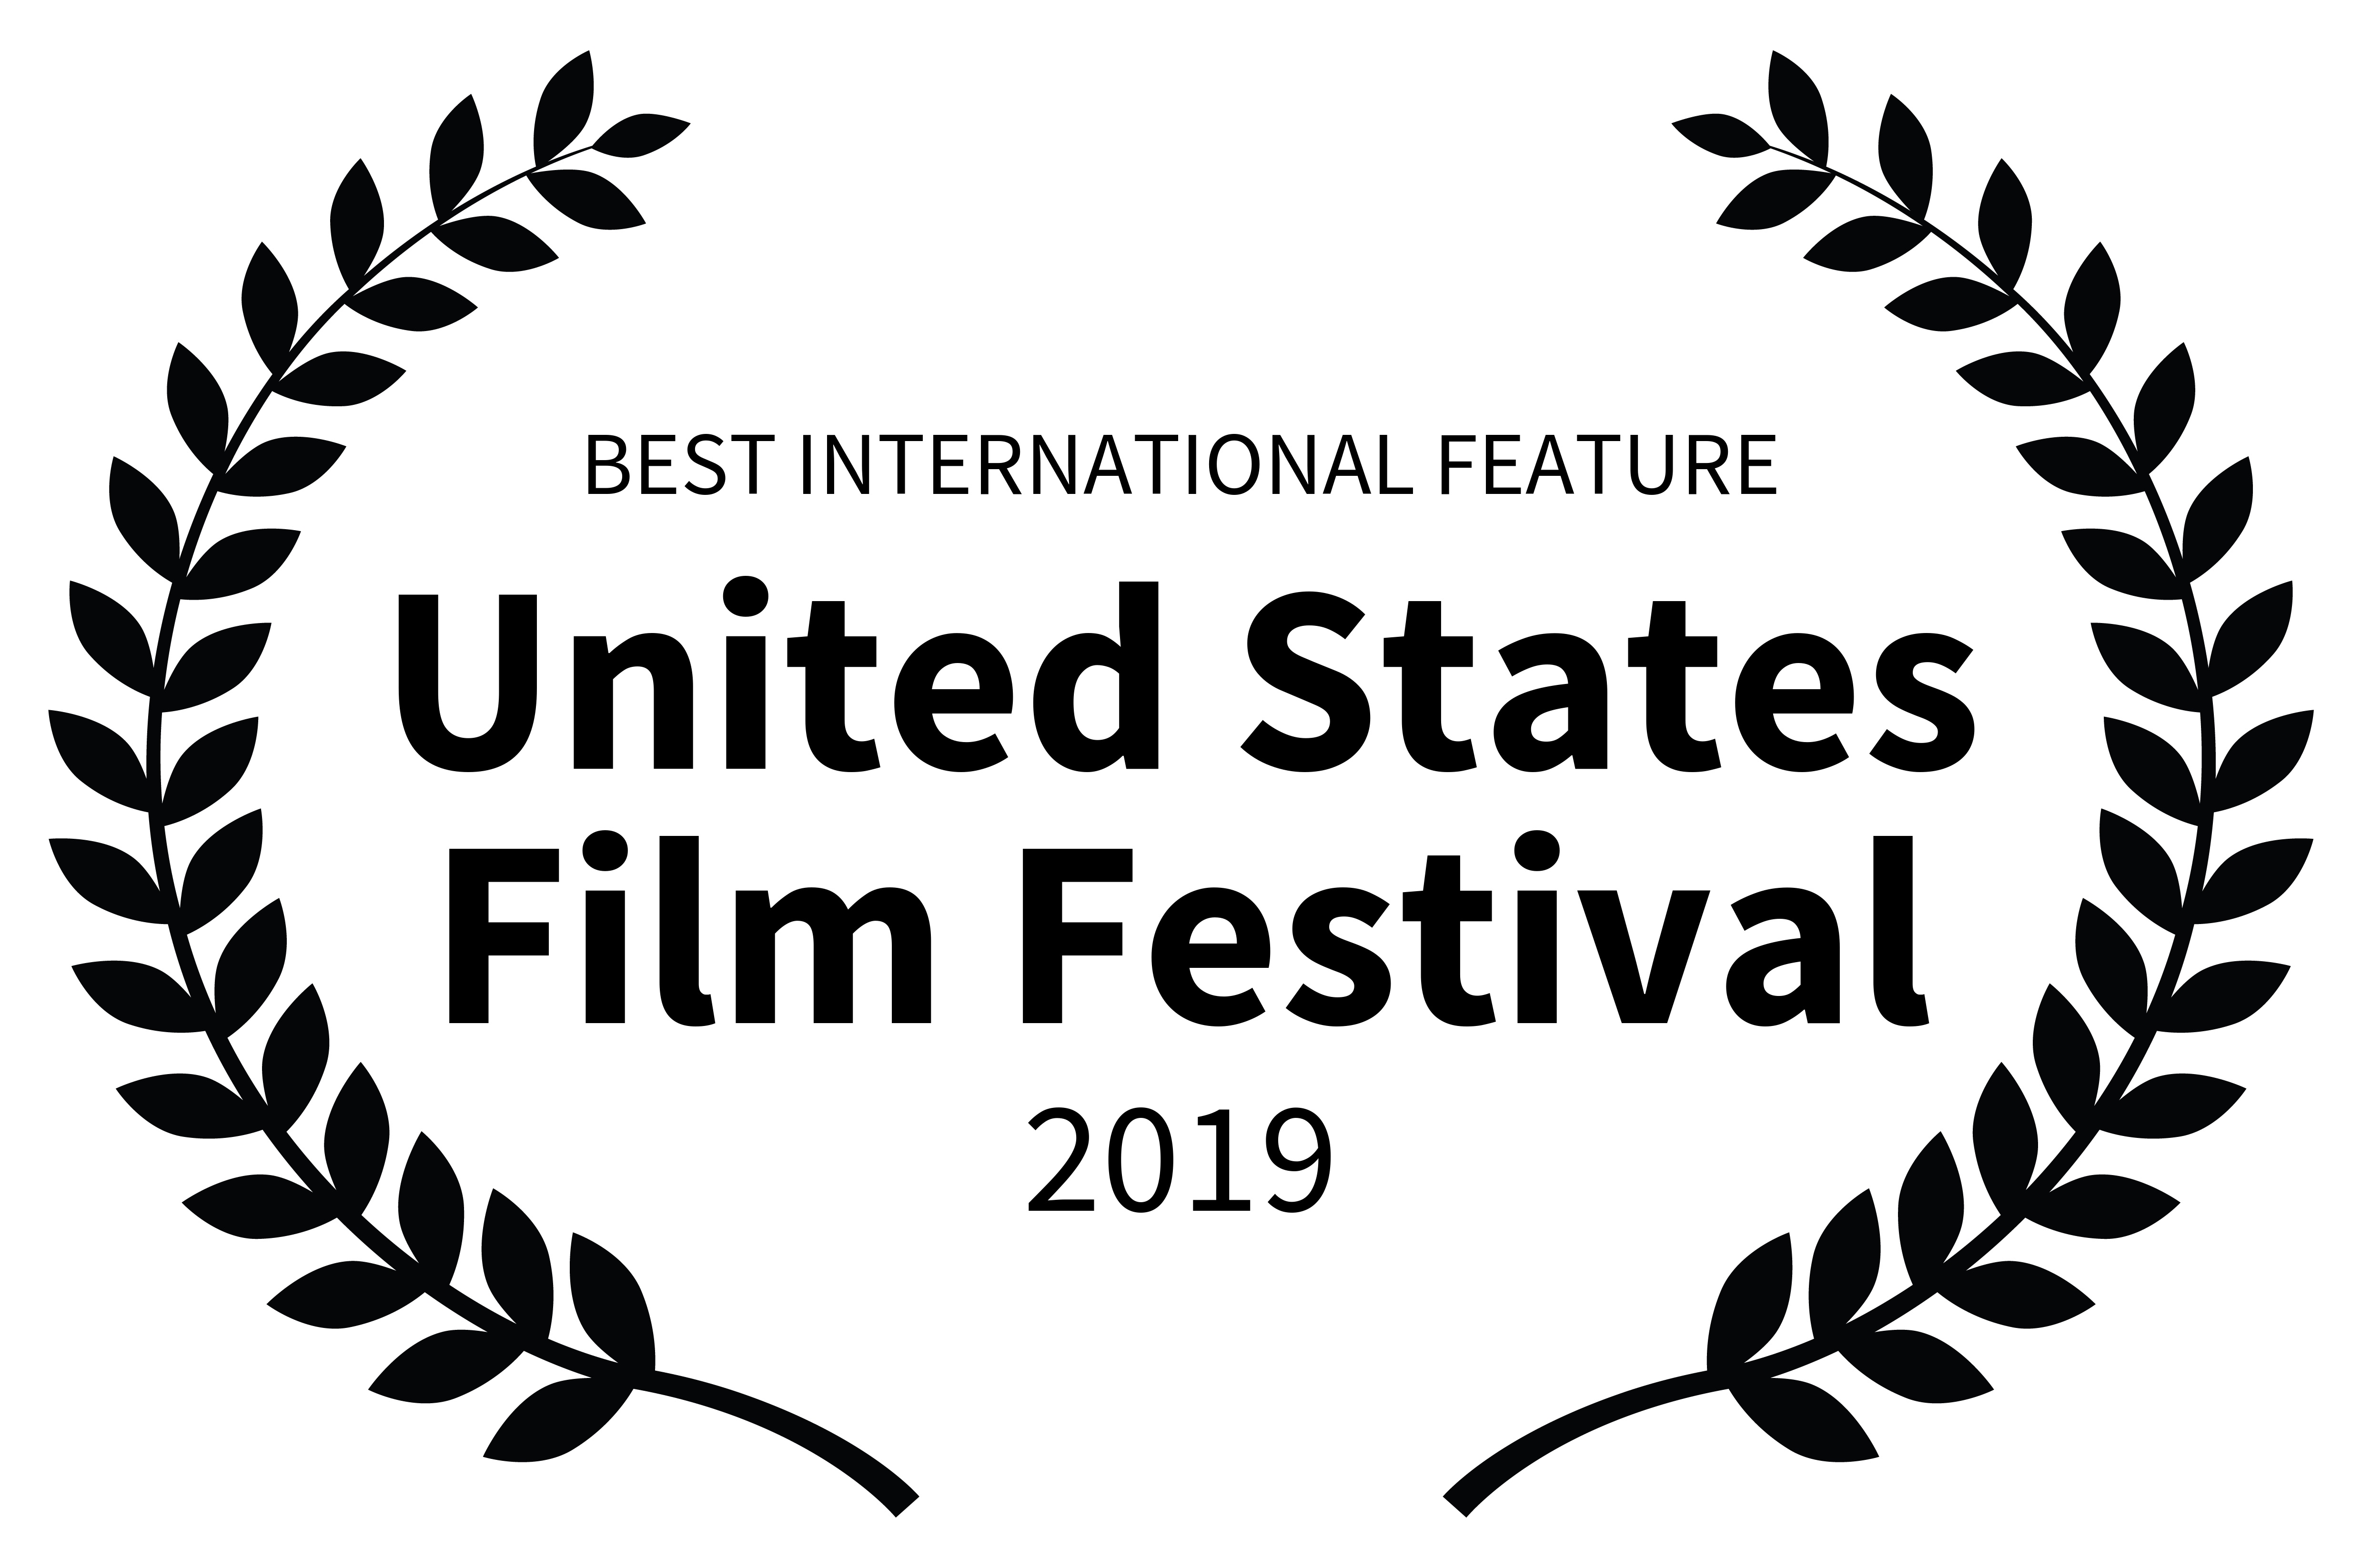 United States Film Festival